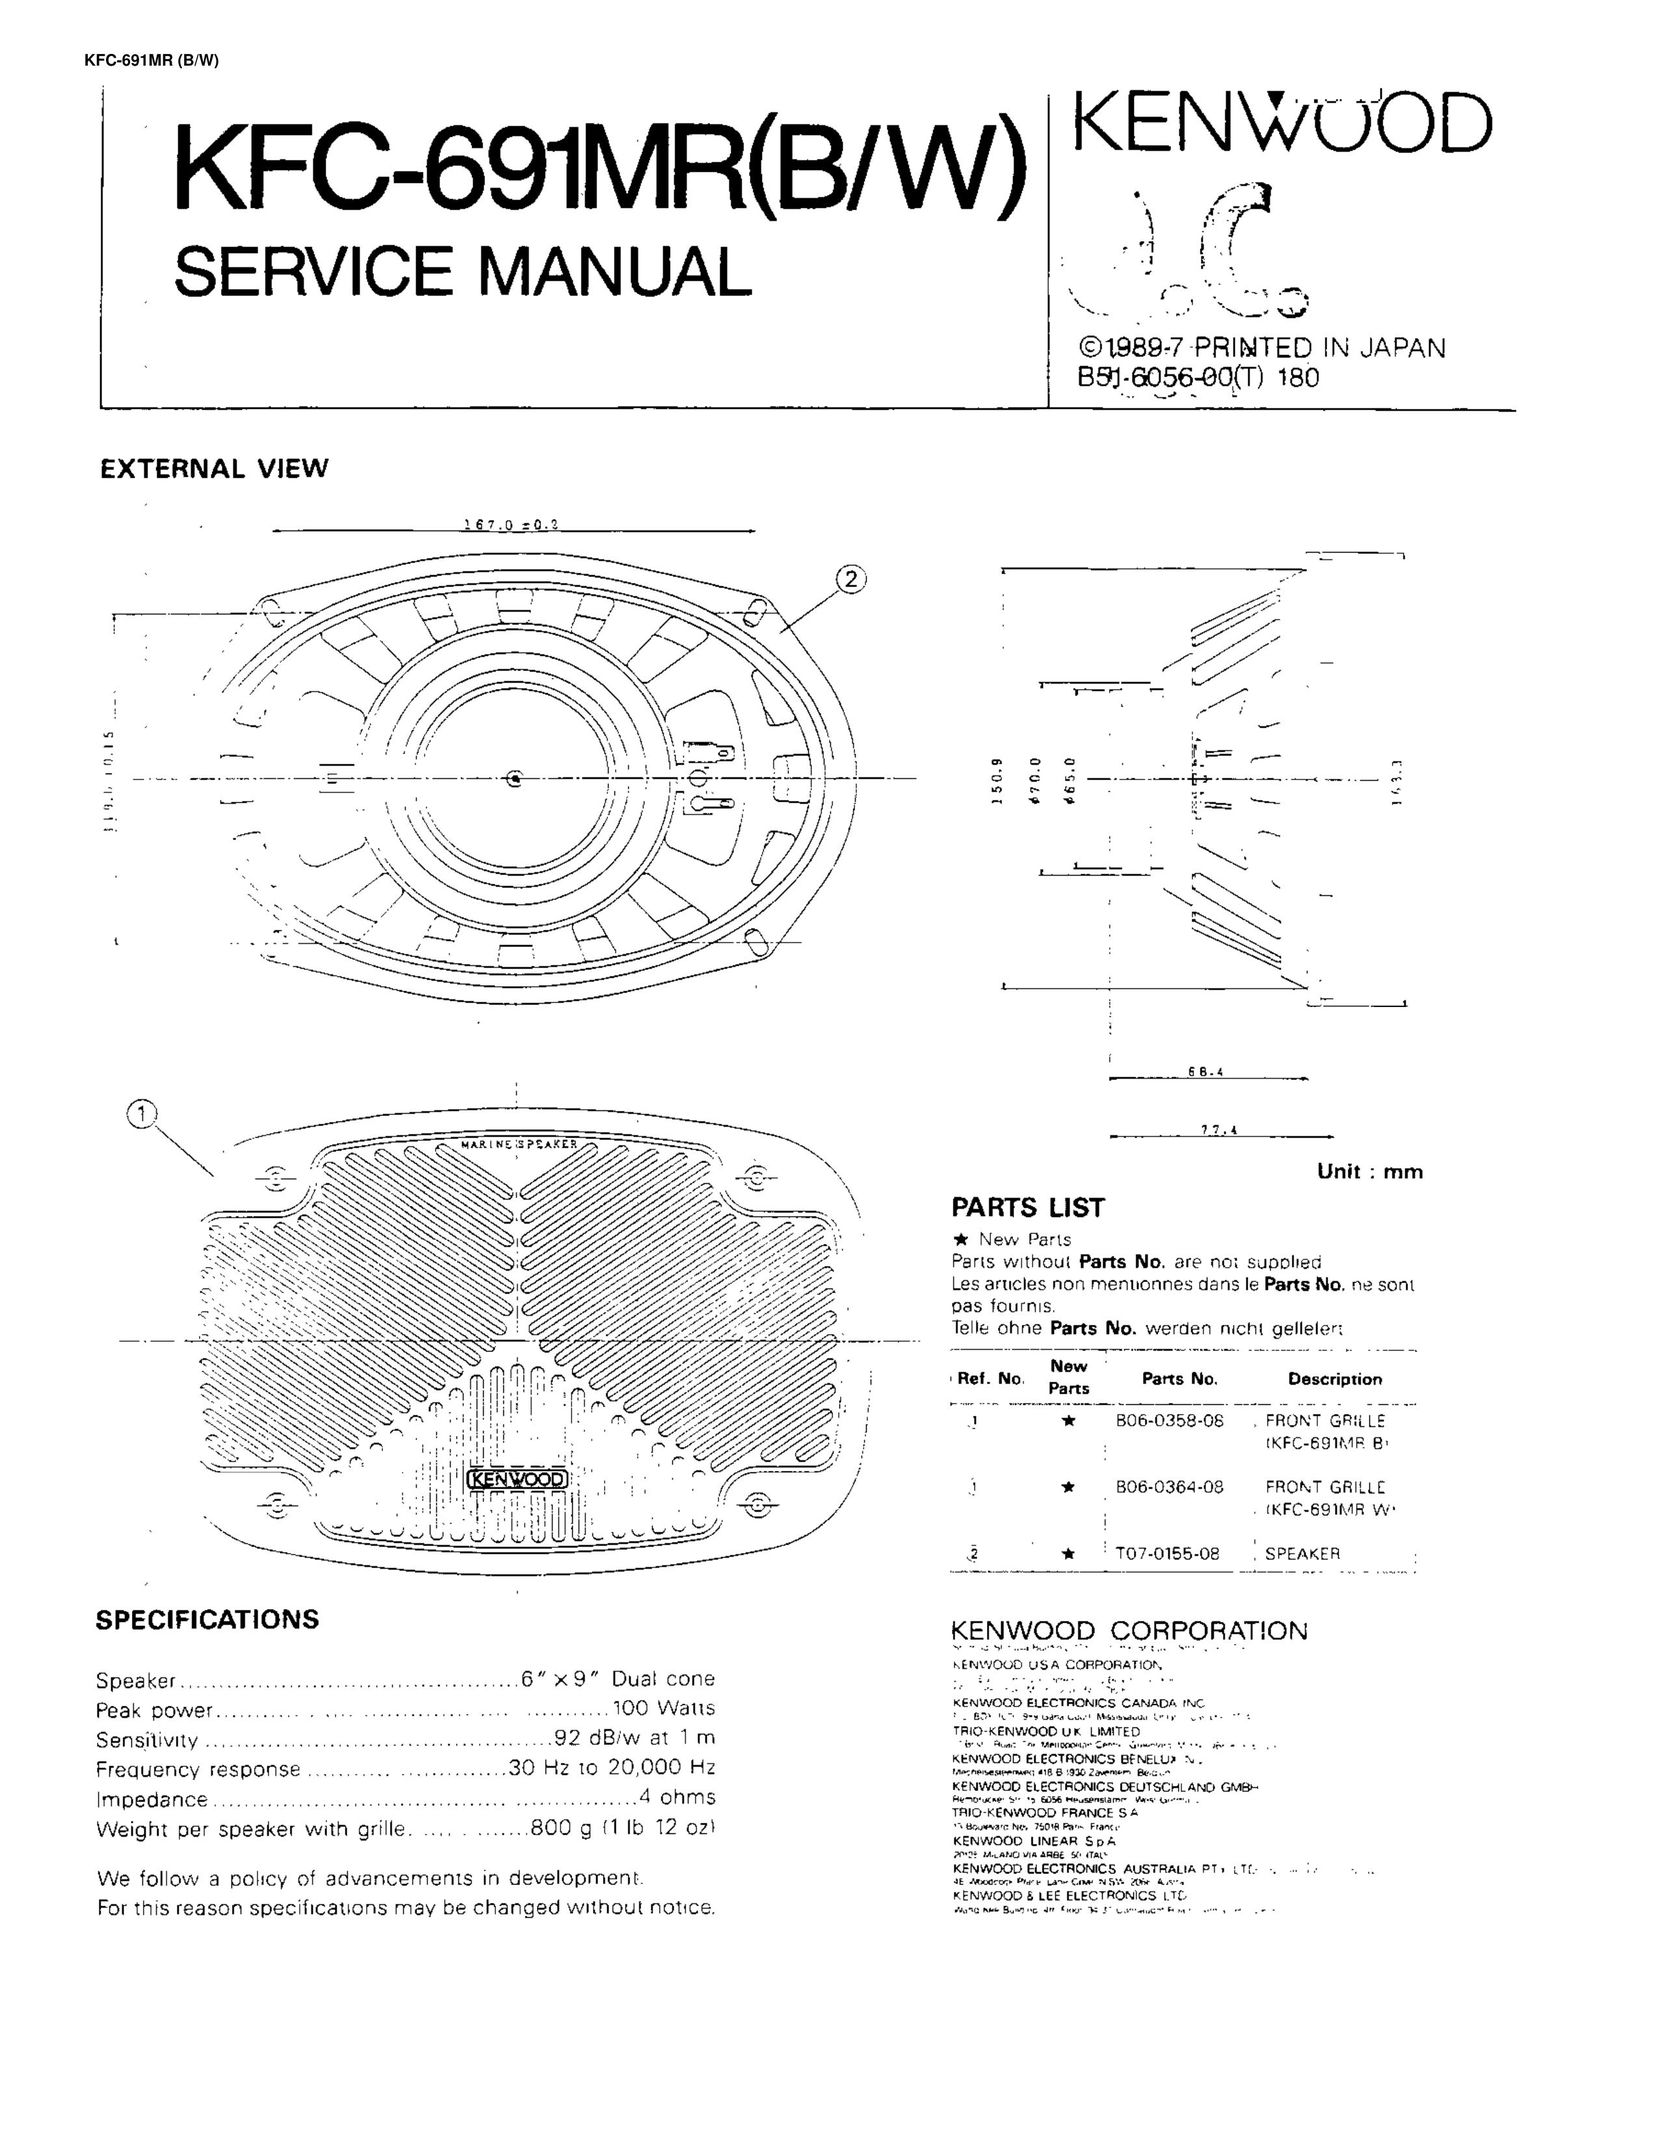 Kenwood KFC-691MR (B/W) Speaker User Manual